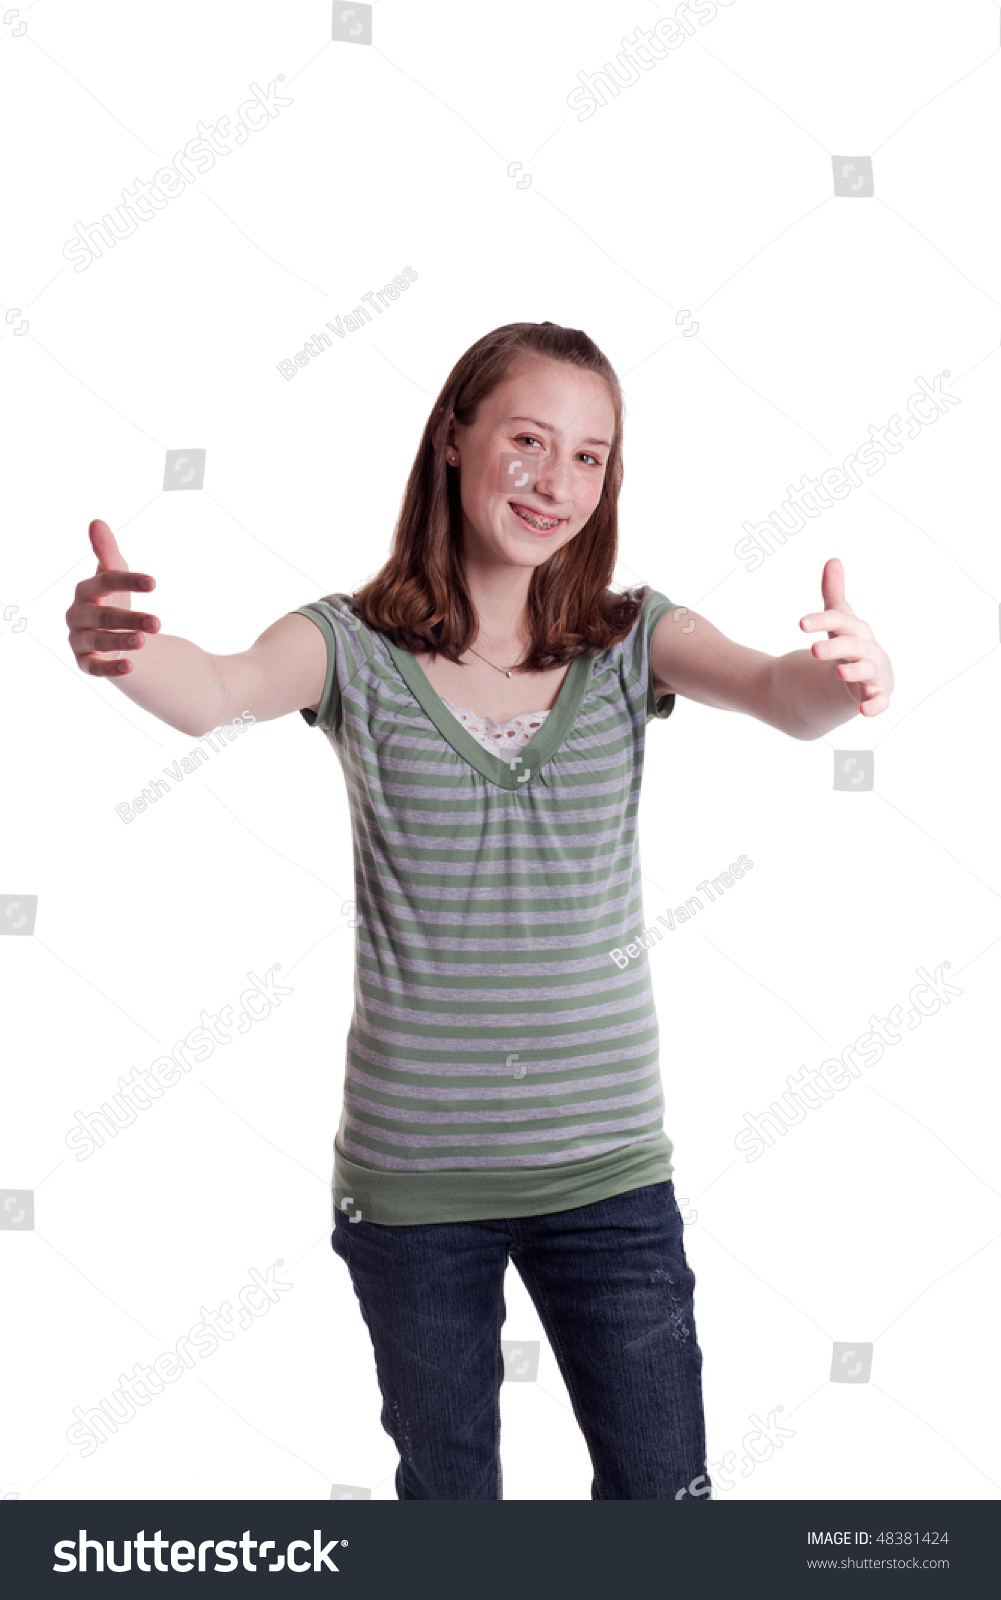 A Young Teenage Girl Reaching For A Hug Stock Photo 48381424 : Shutterstock